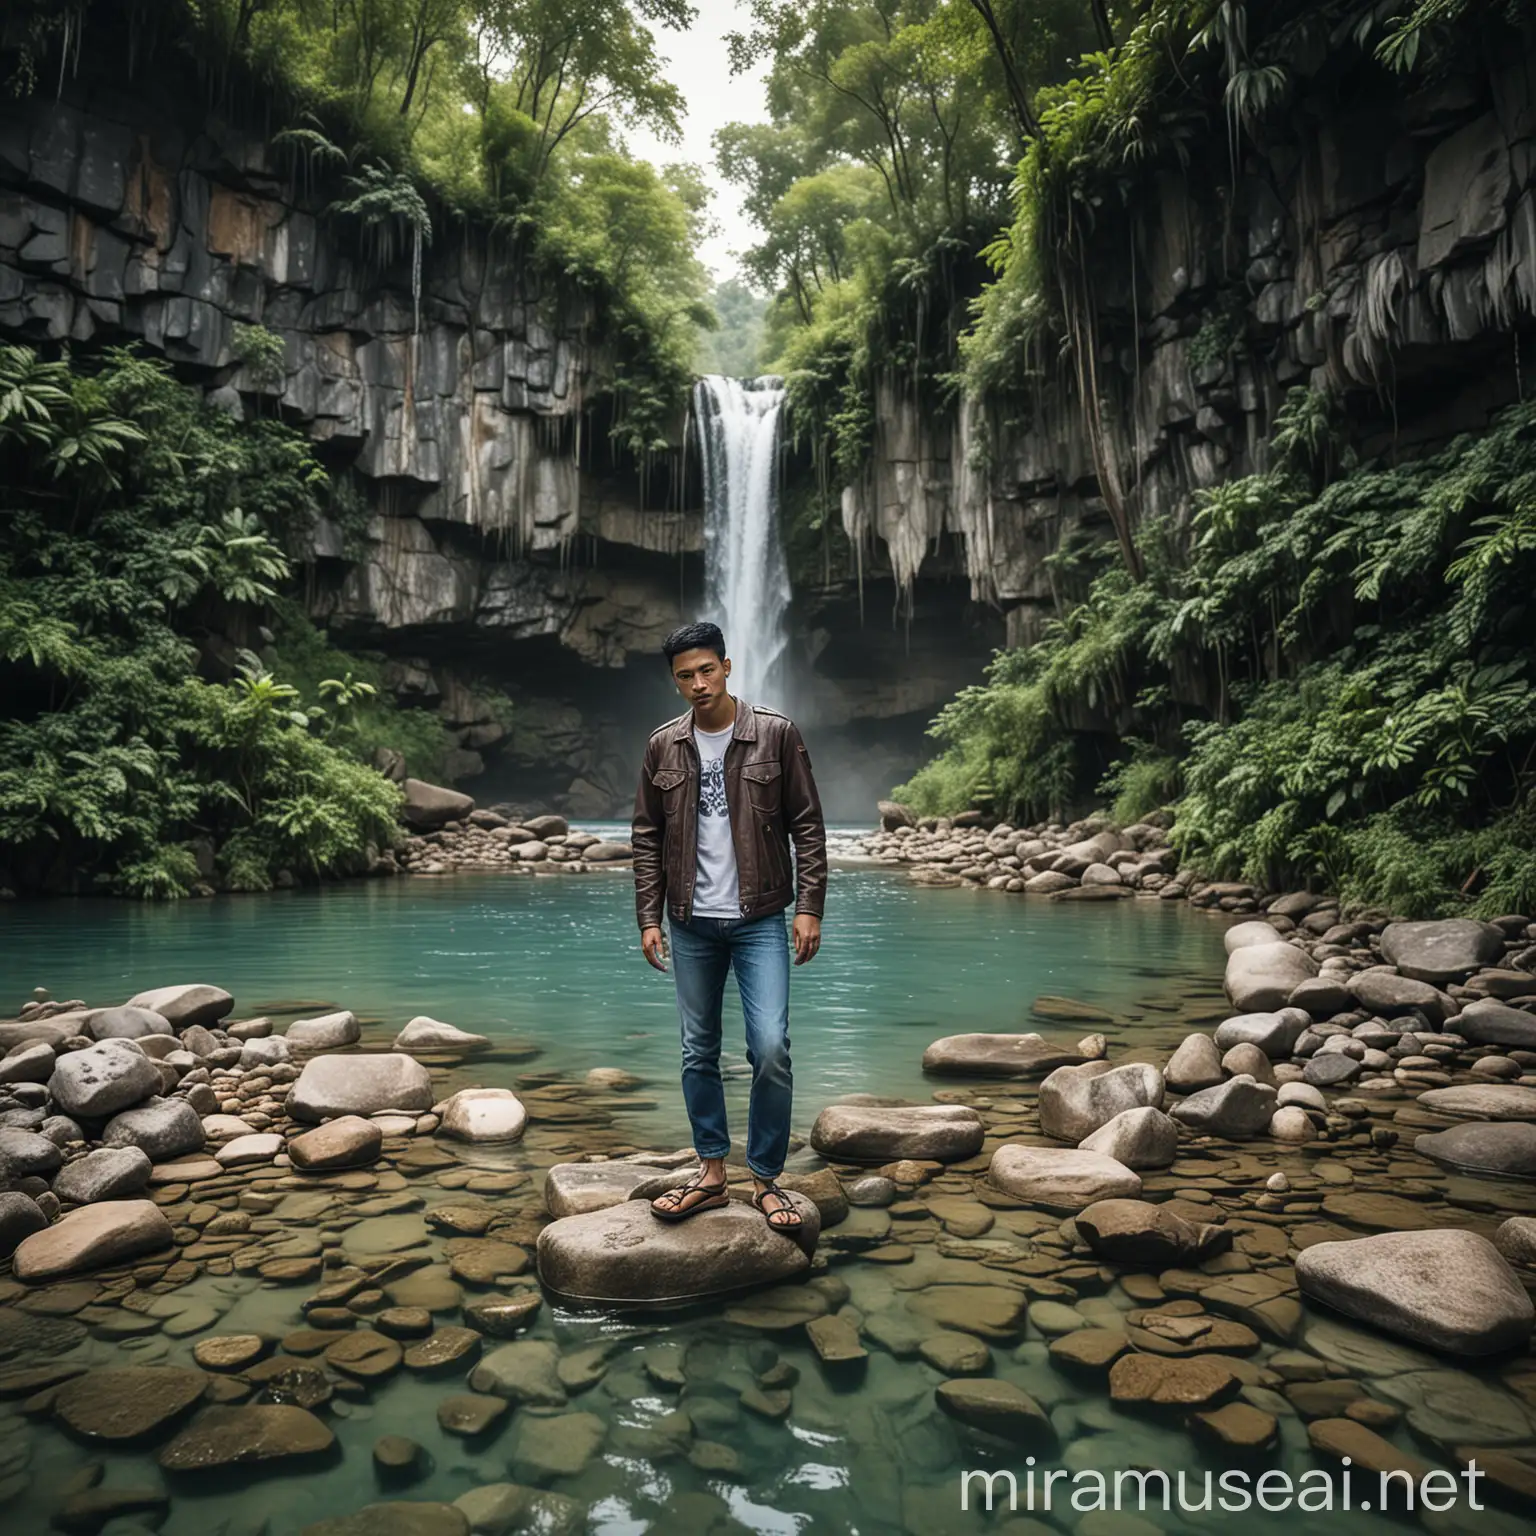 se orang pria indonesia tubuh agak kurus memakai jaket kulit memakai jeans warna biru memakai sandal kulit sedang berdiri di bebatuan di tepi sungai yang dangkal ,air sungat sangat jernih, latar belakang sungai dangkal airnya sangat jernih air tenjun pepohonan hijau, air terjun yang indah